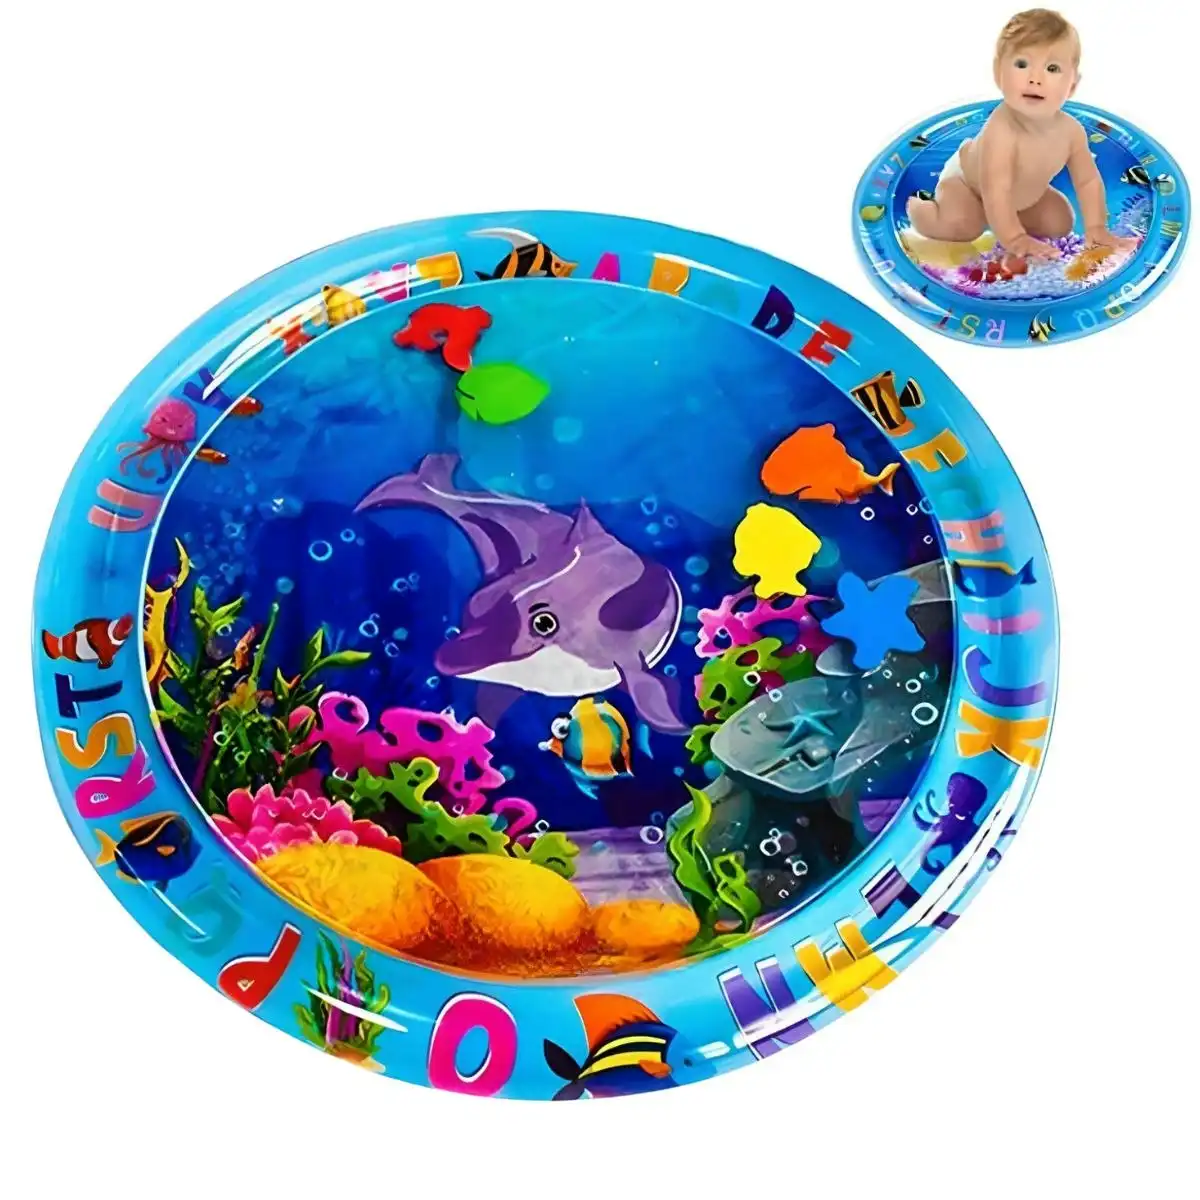 Toddly SplashCircle Round Tummy Time Water Mat Baby Sensory Play Mat